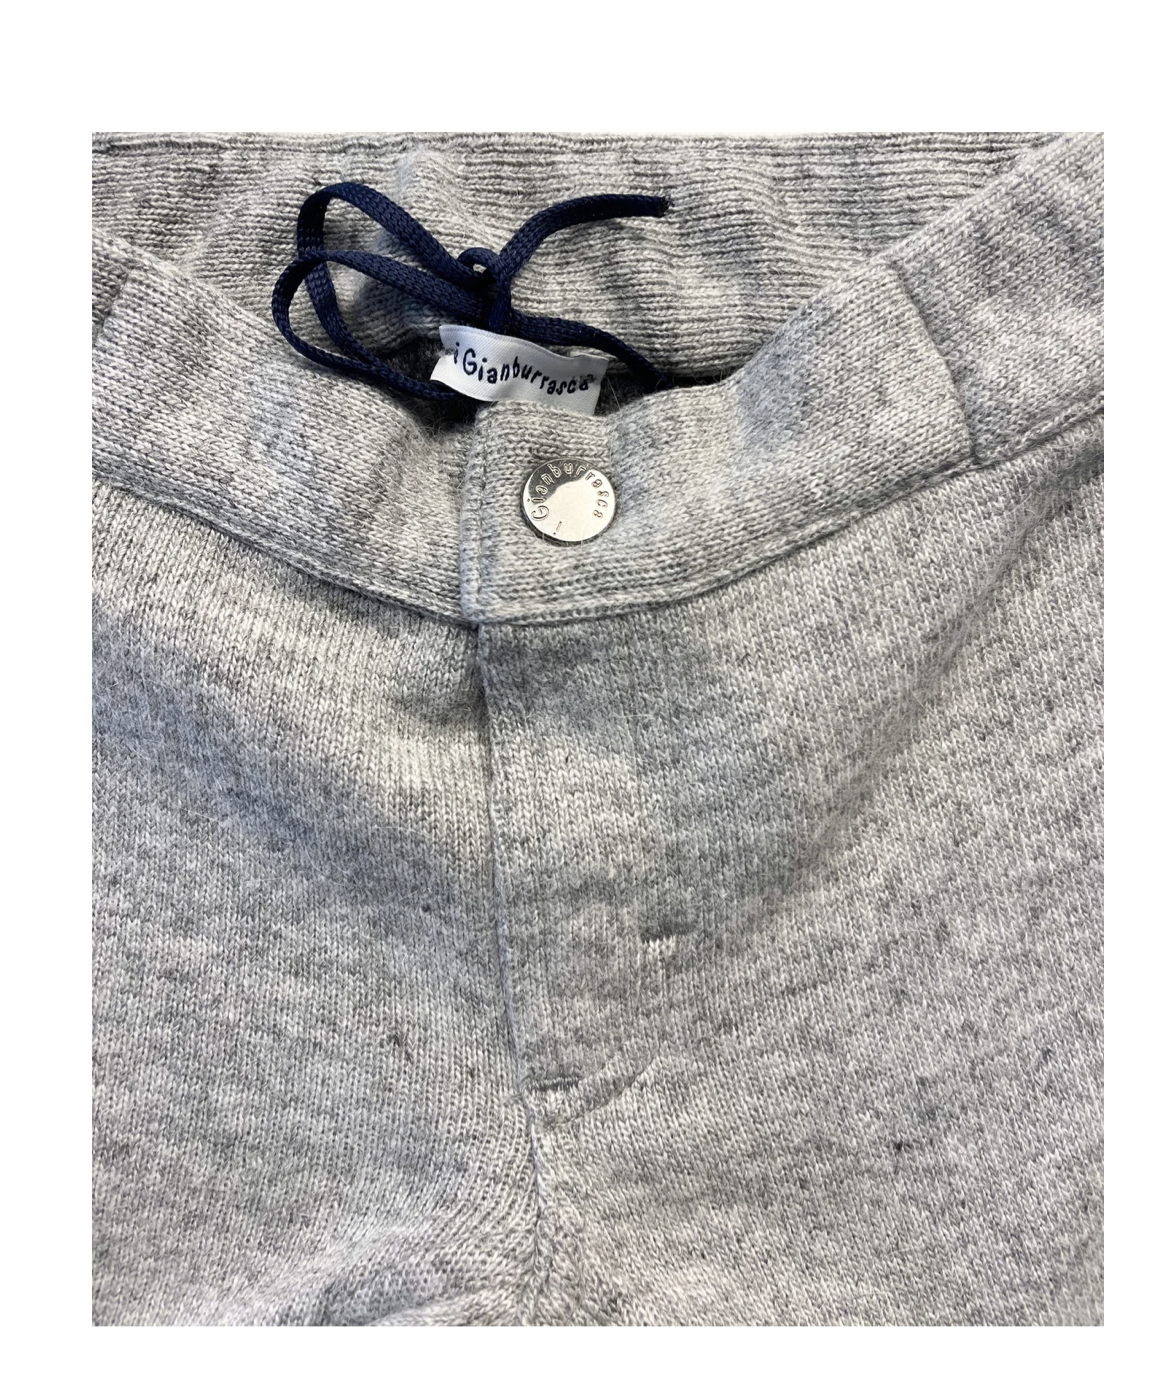 I GIANBURRASCA - Pantalon confort gris clair (neuf) - 2 ans